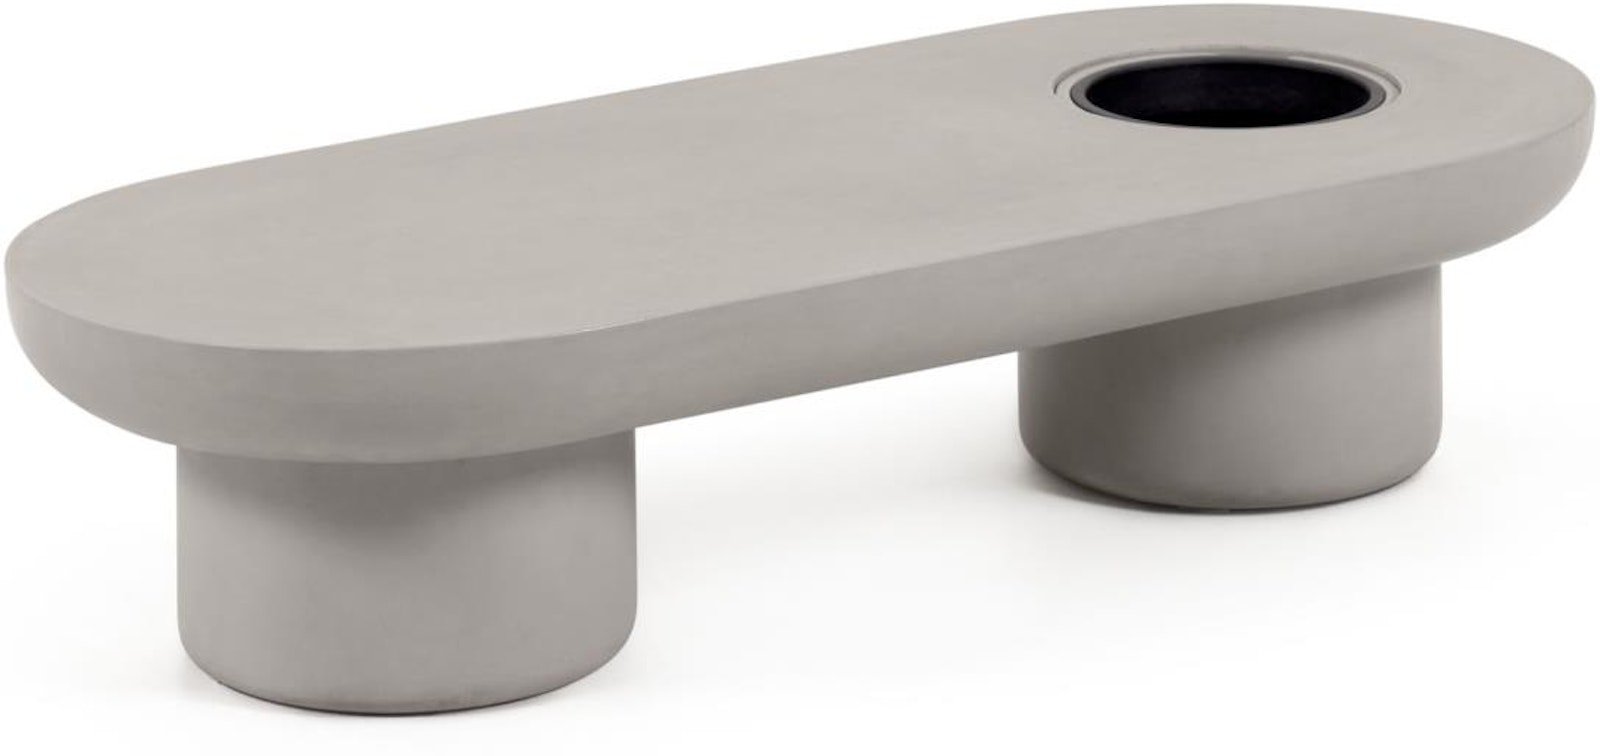 9: Taimi, Udendørs sofabord, moderne, nordisk, cement by Laforma (H: 30 cm. x B: 60 cm. x L: 140 cm., Natur)